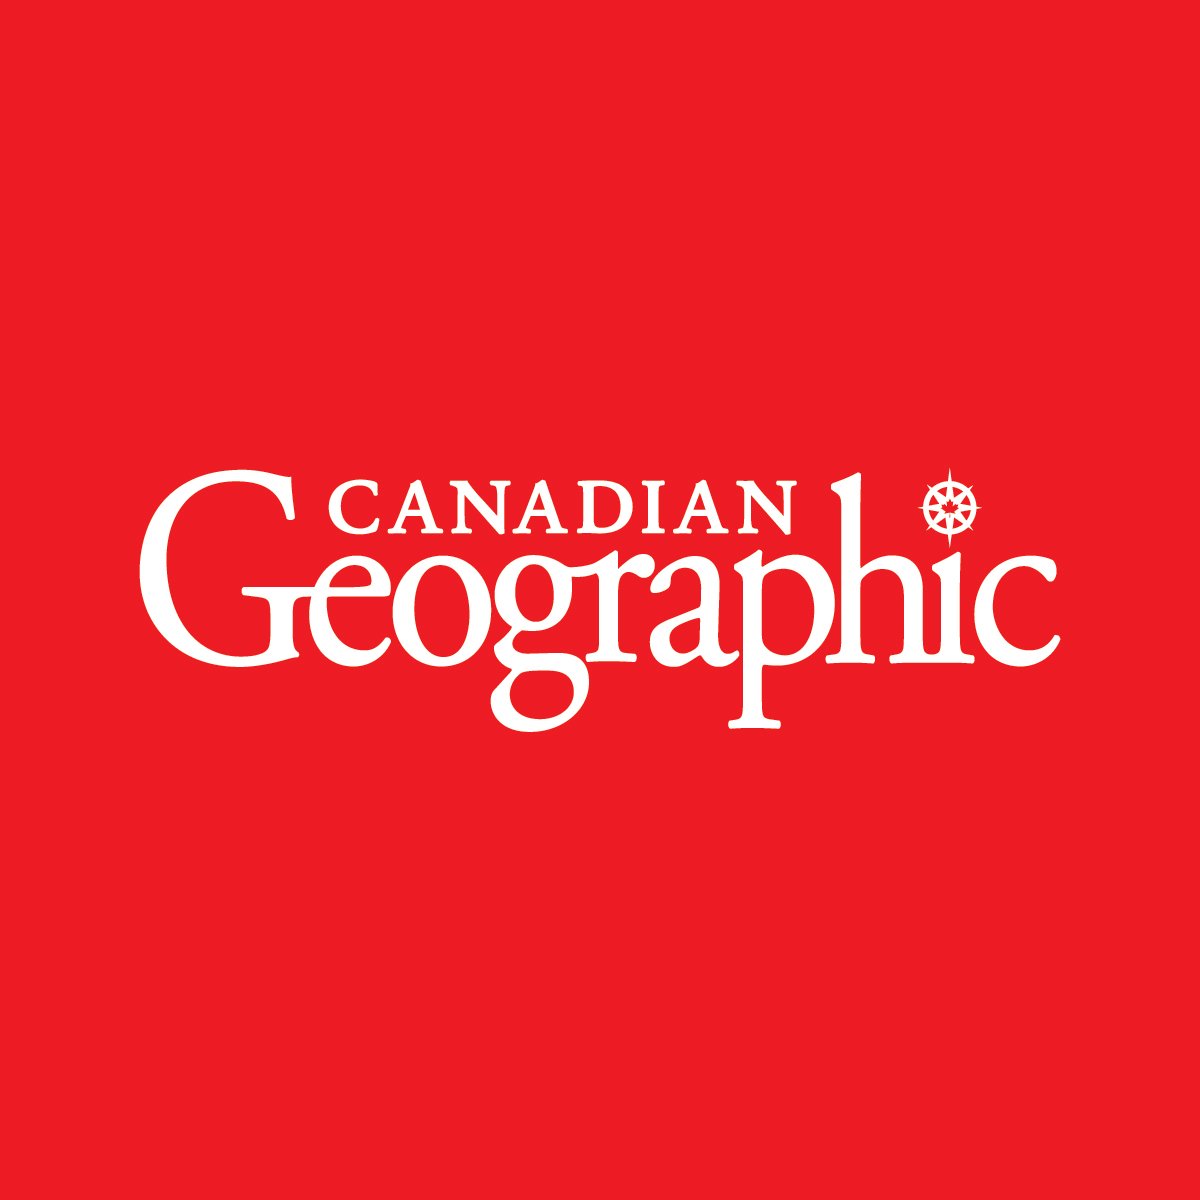 Canadian geographic logo